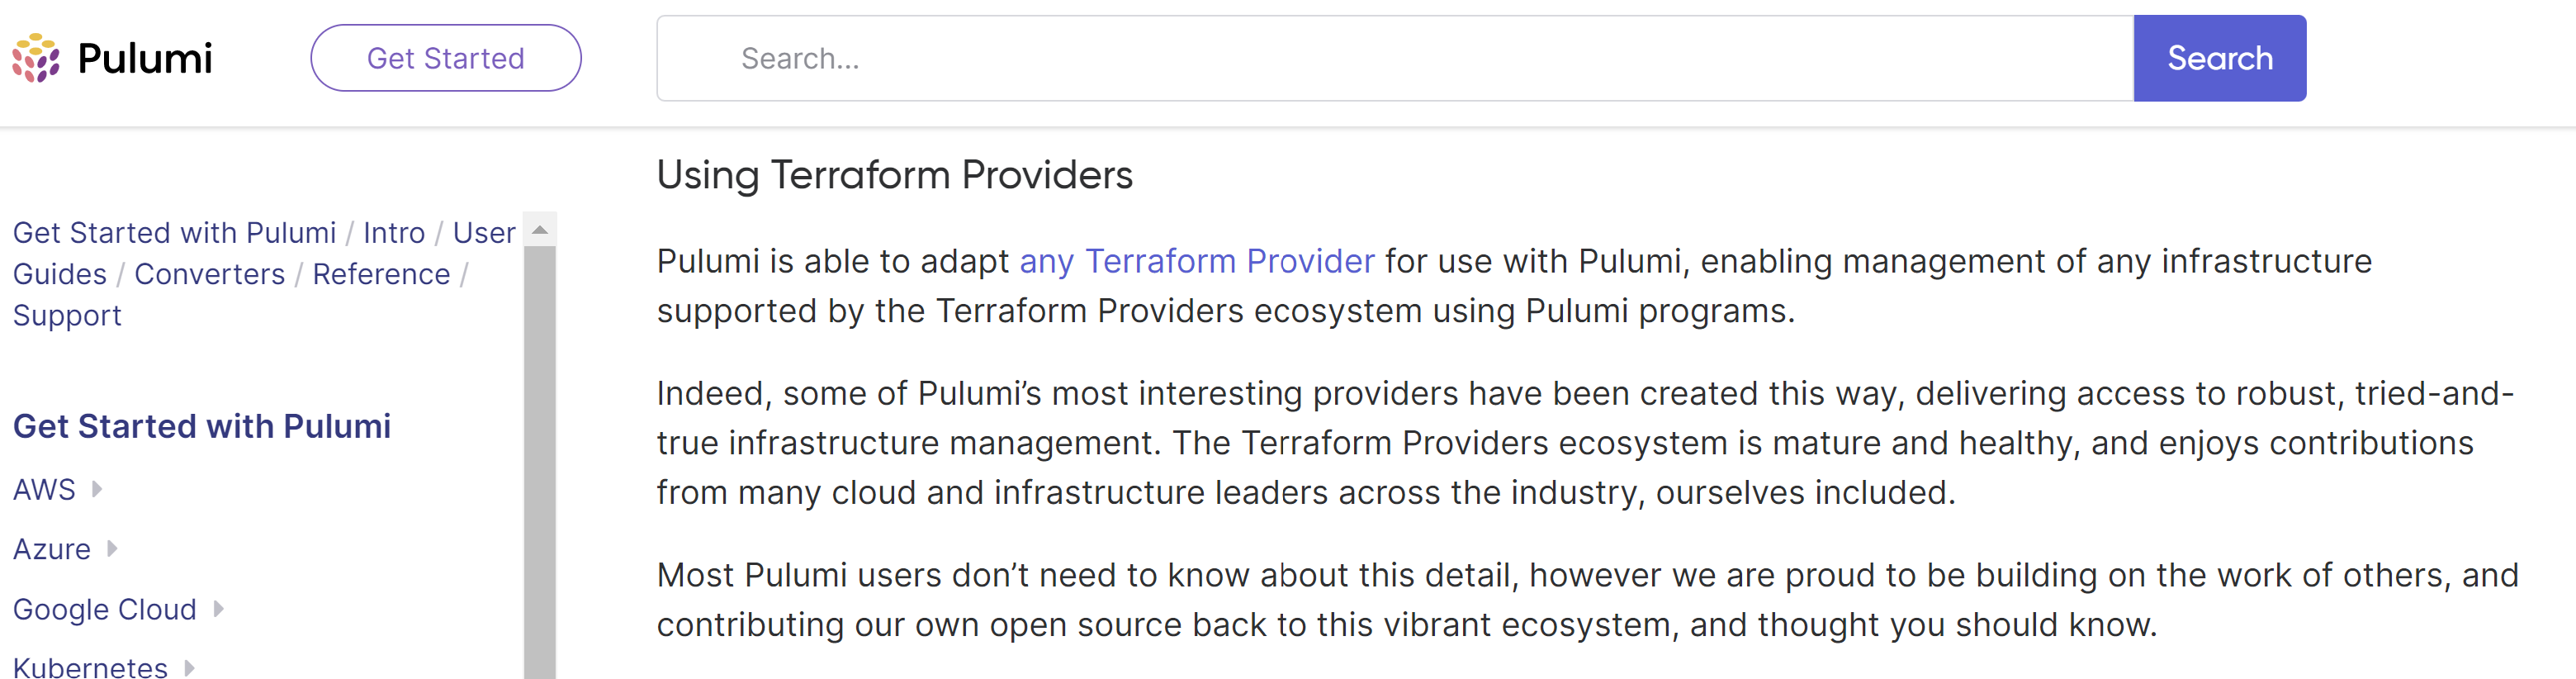 Pulumi documentation about using Terraform Providers.